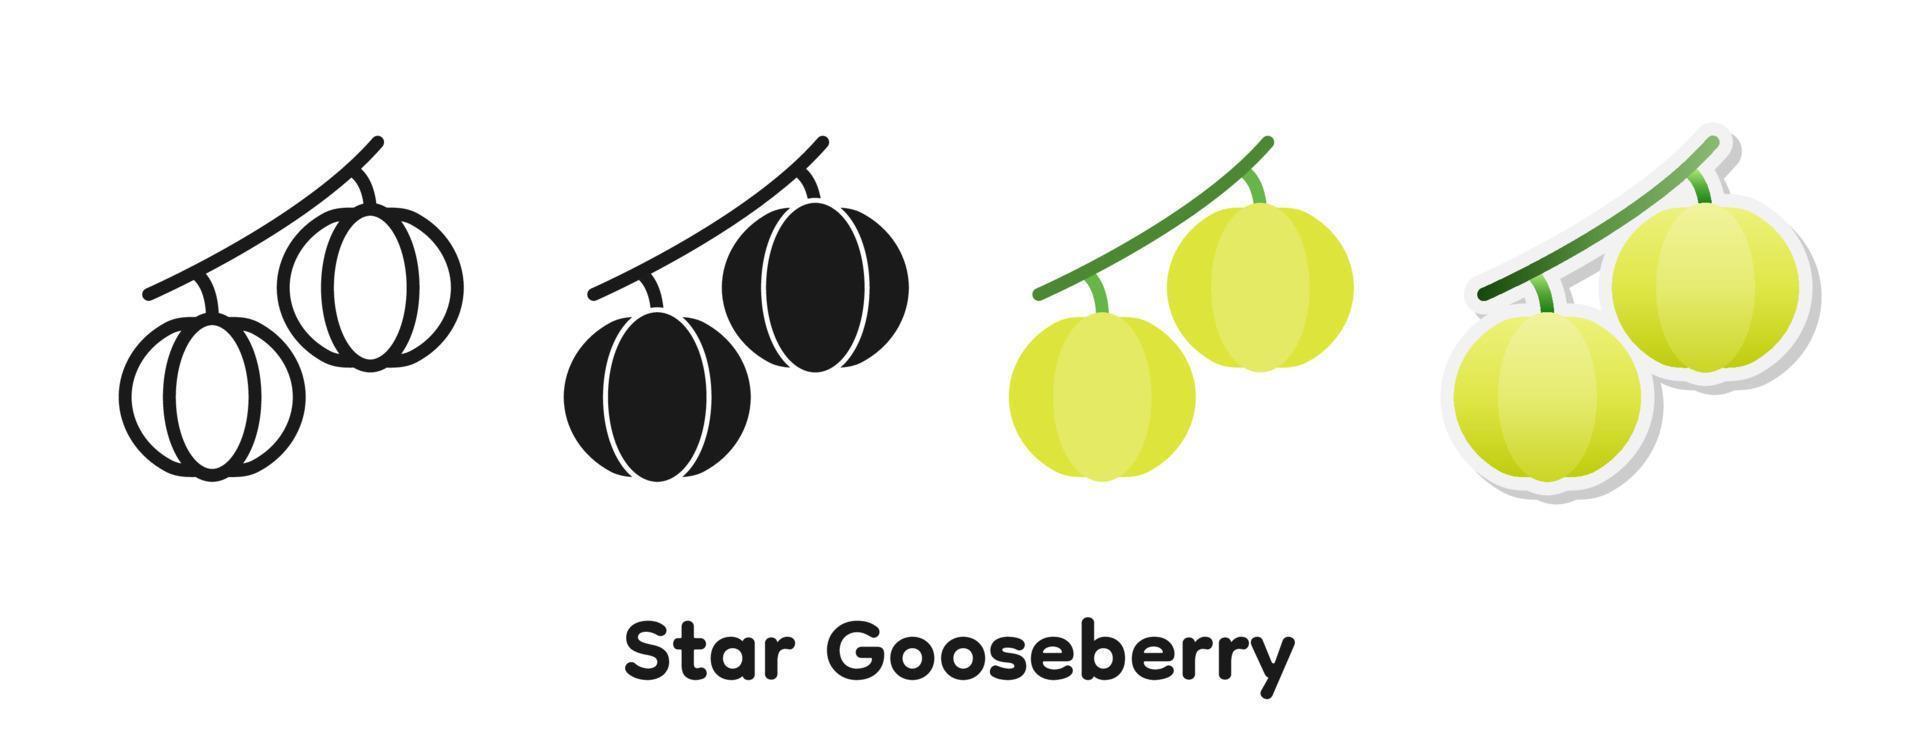 Vector icon set of Star gooseberry.